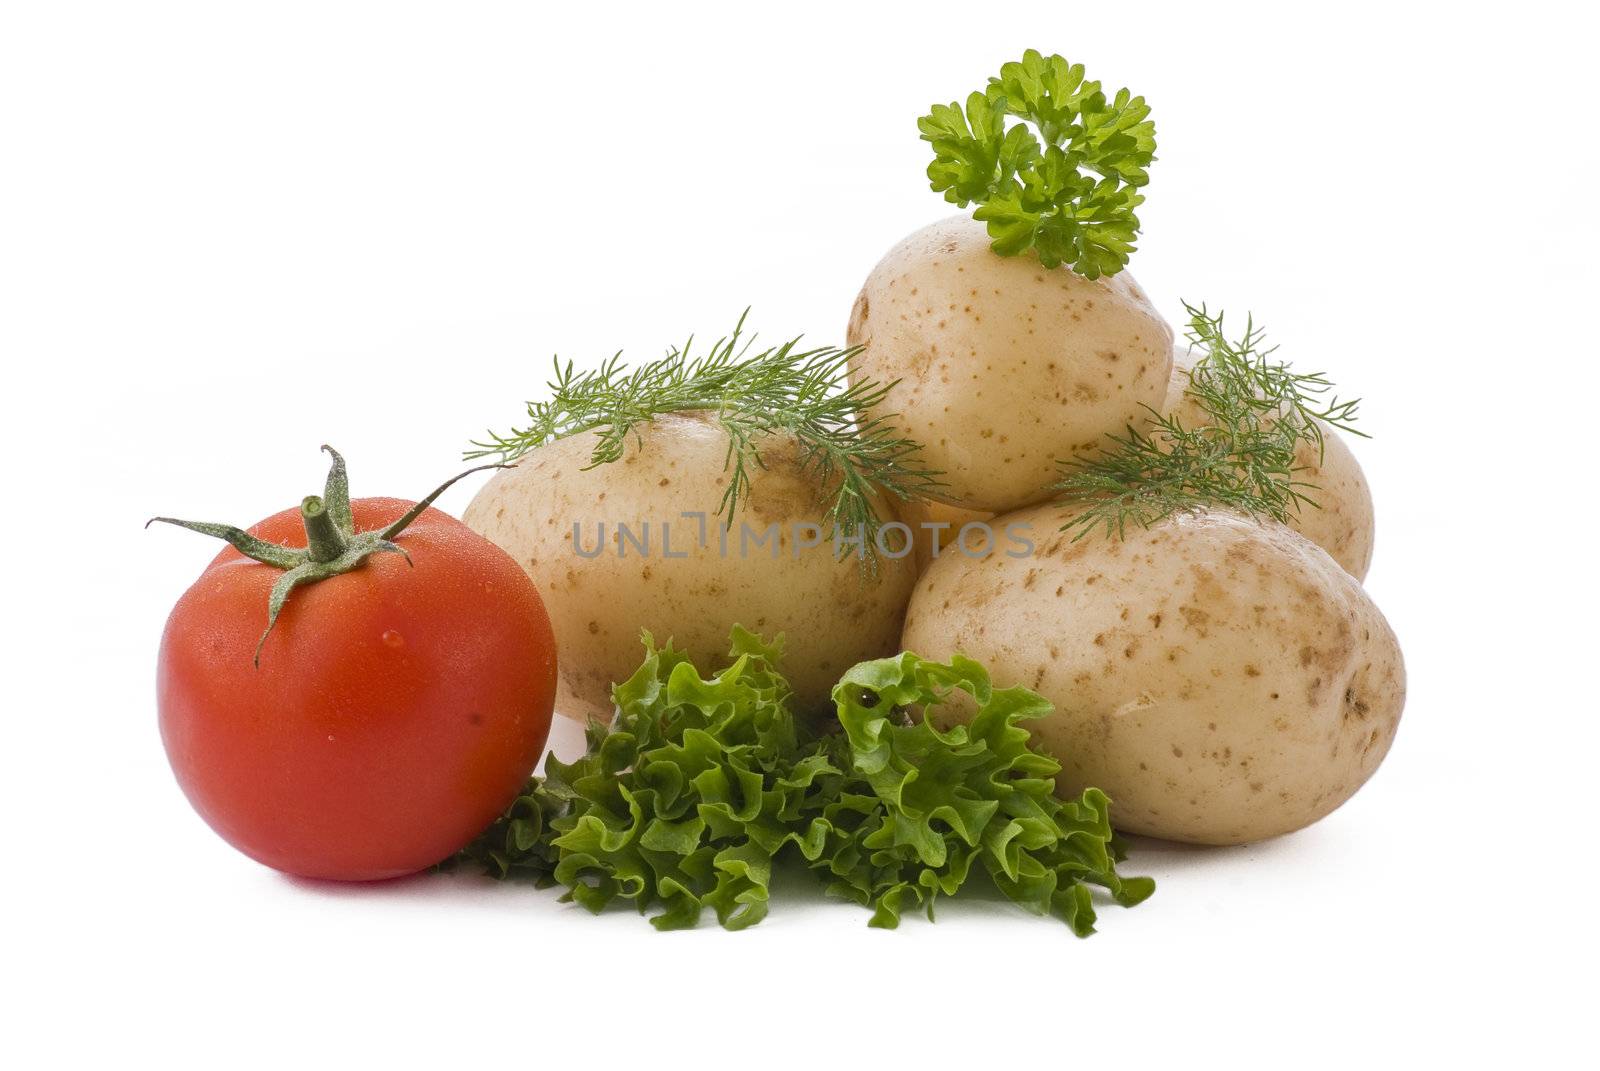 Potatoes, tomato, salad and herbs by caldix